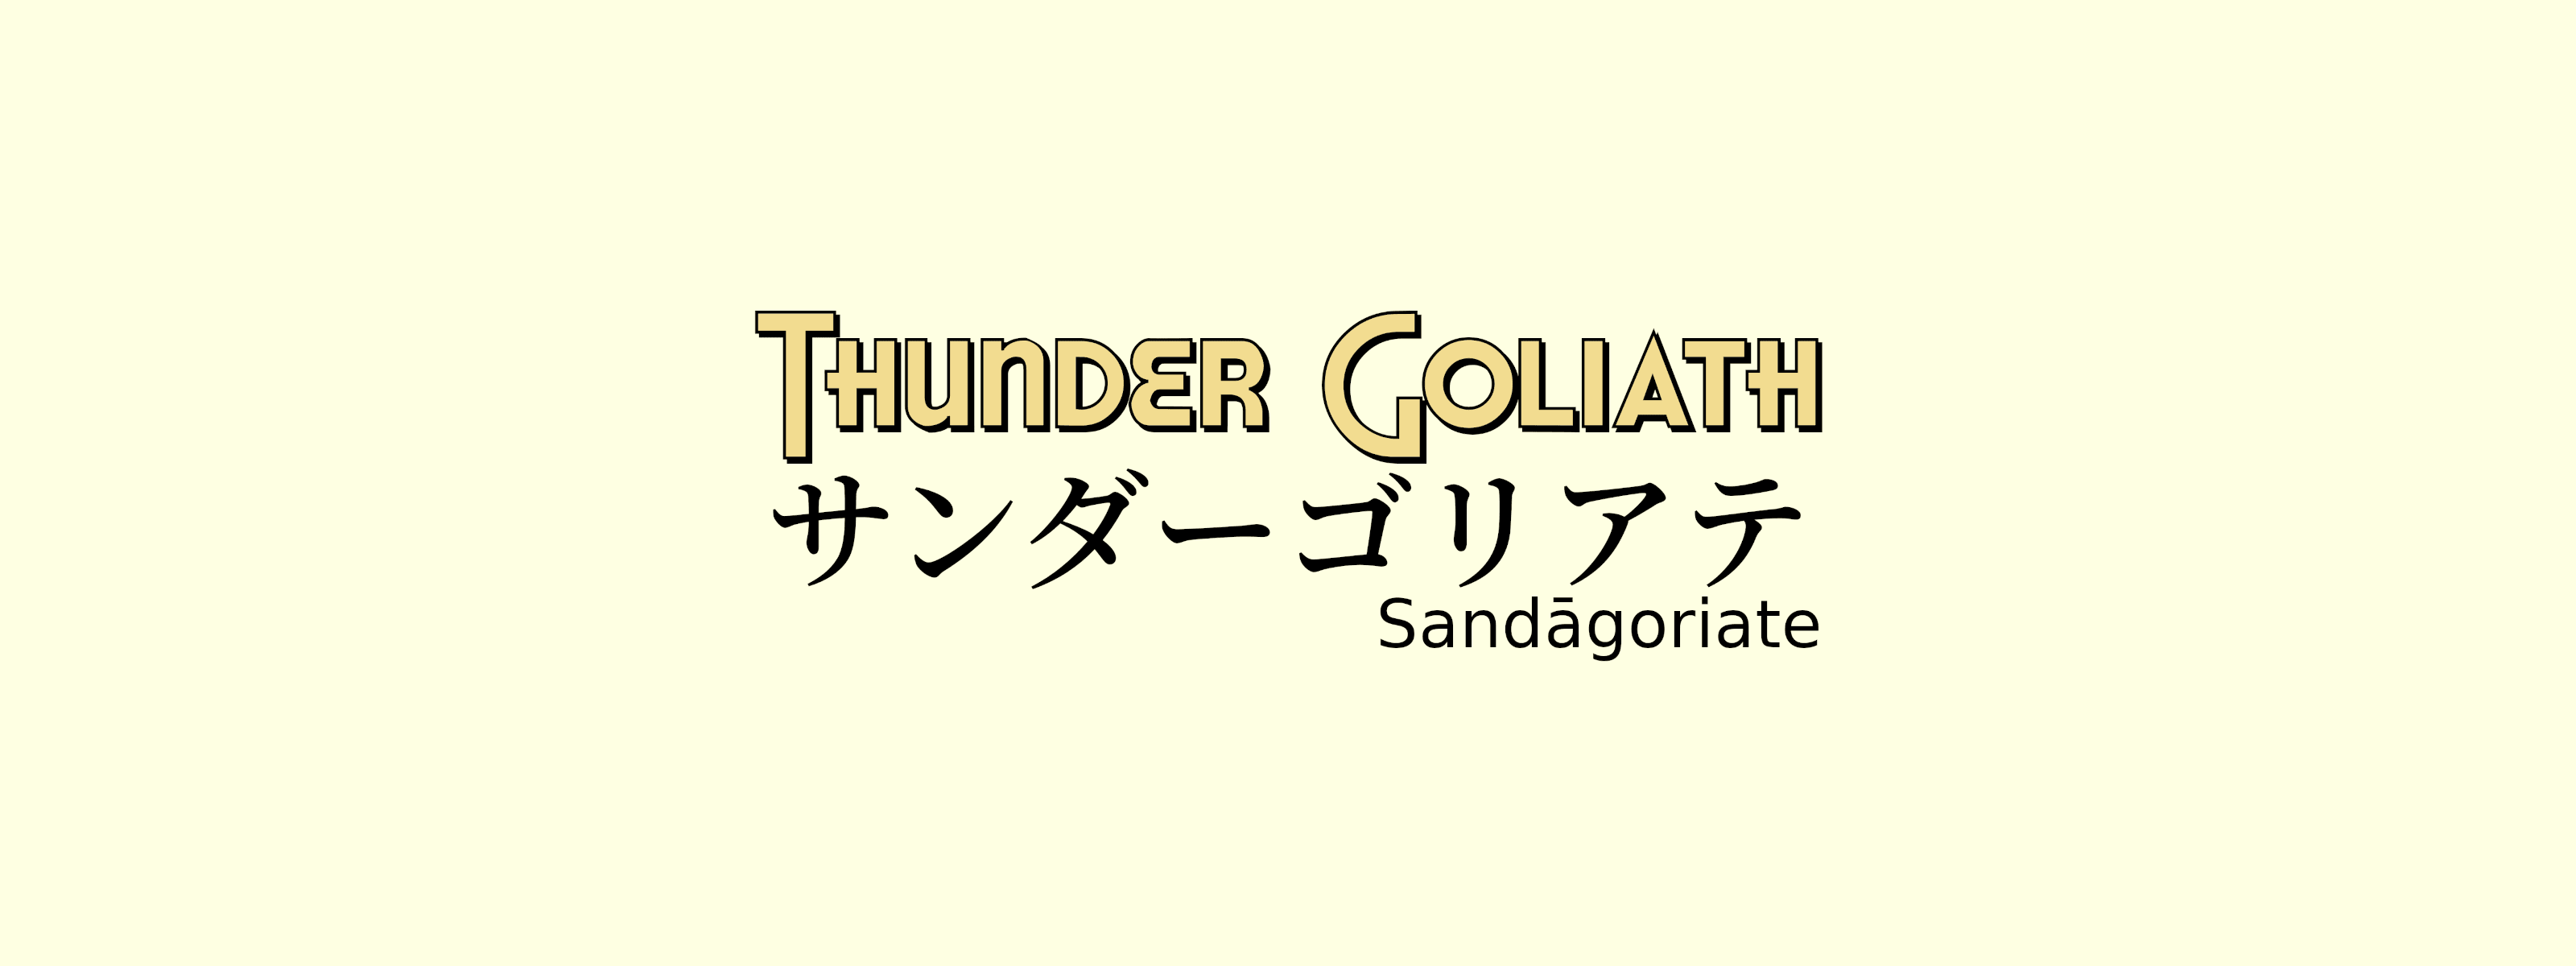 Sandagoriate banner